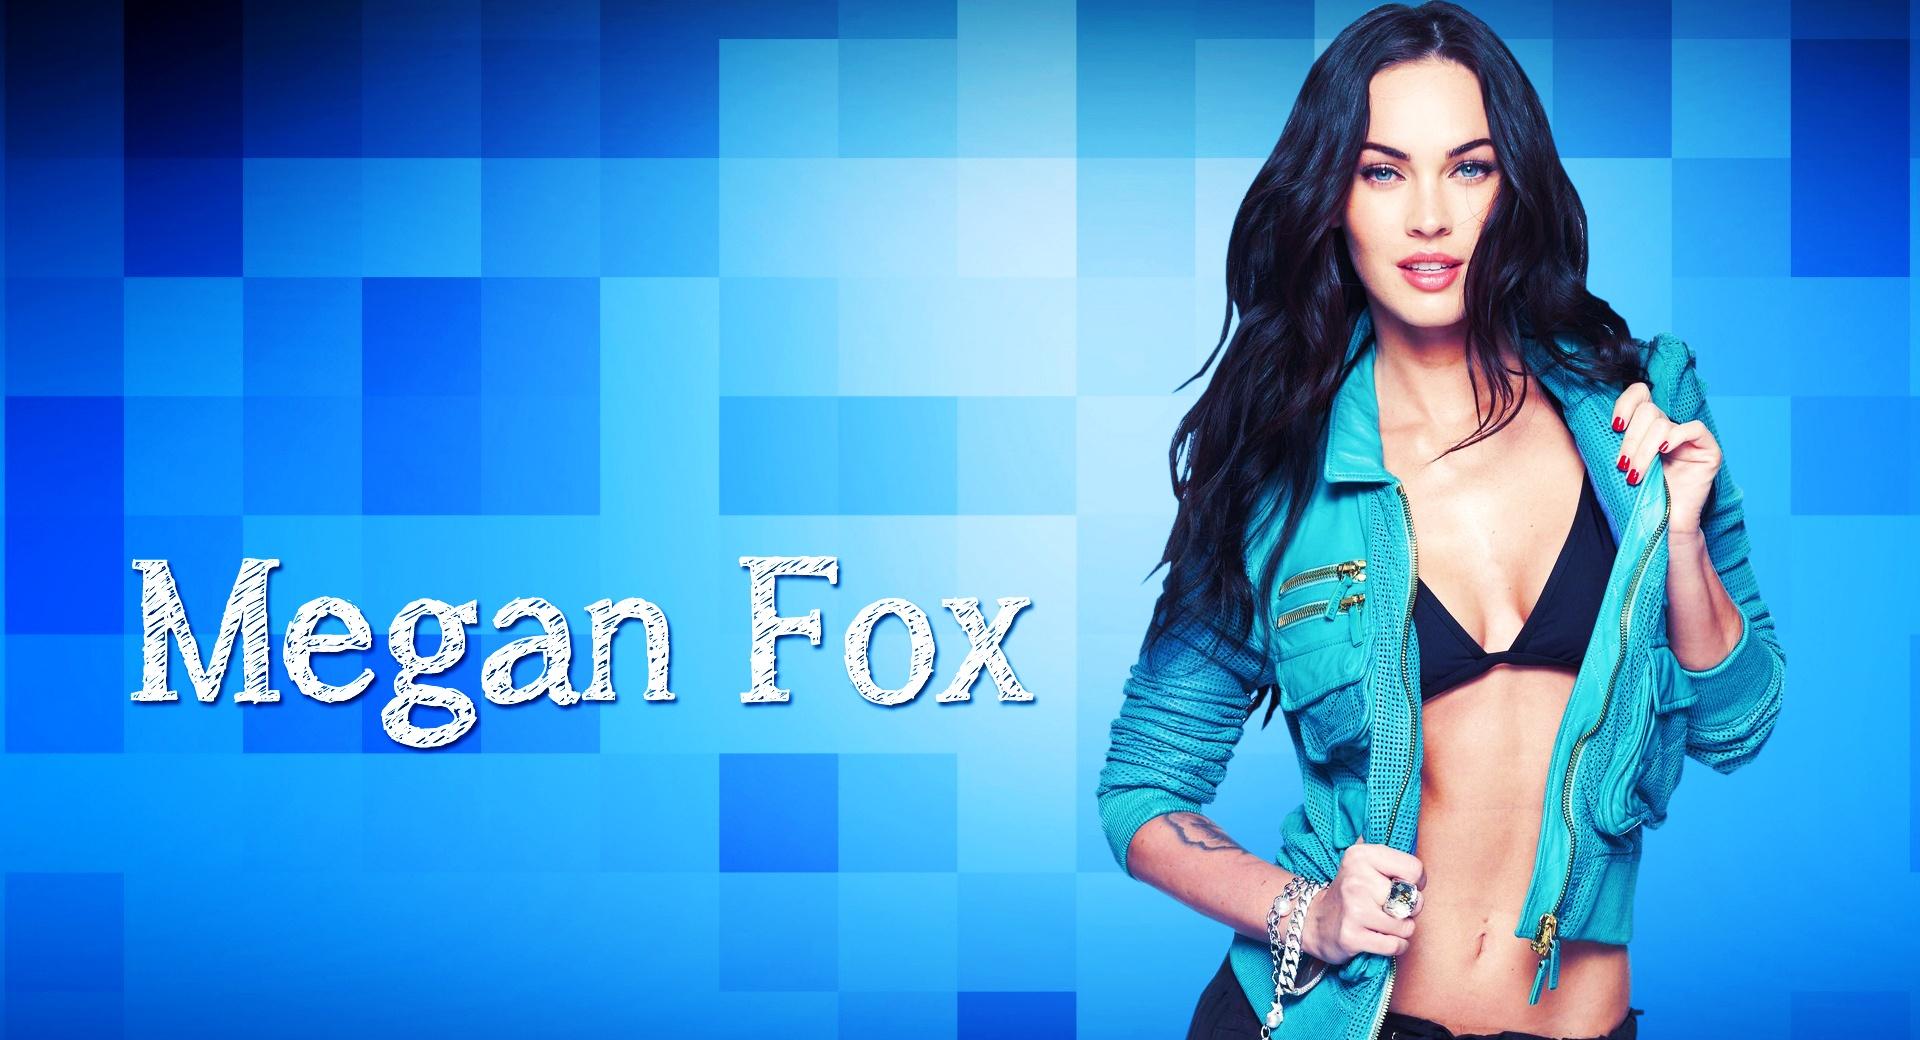 Megan Fox Hot at 2048 x 2048 iPad size wallpapers HD quality